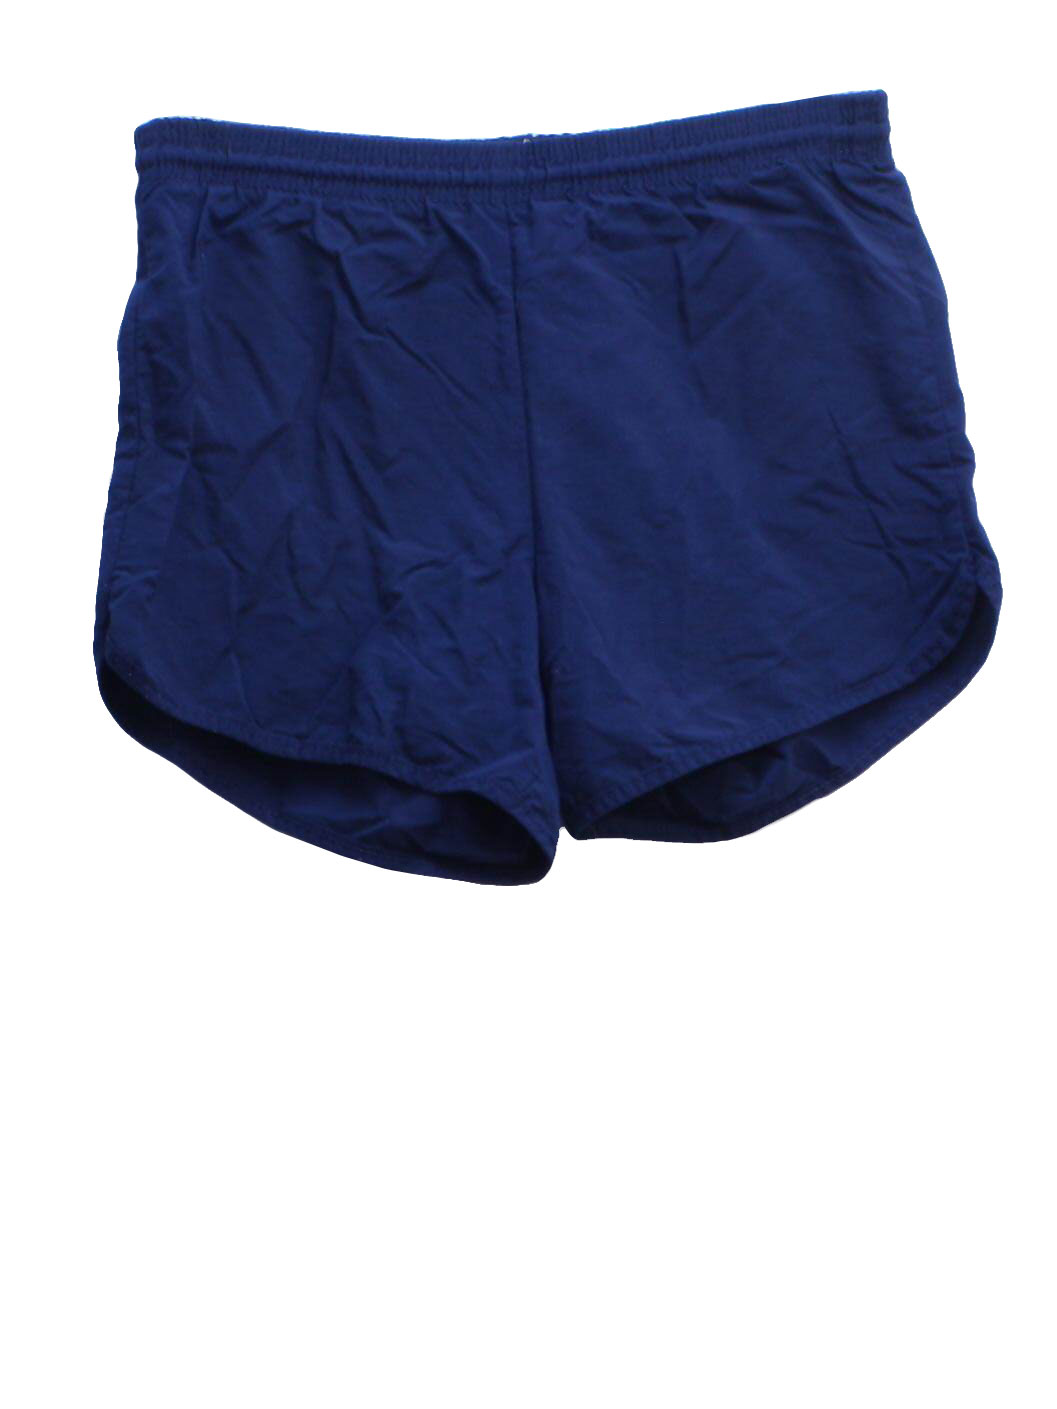 90s Retro Shorts: 90s -Soffe Sport- Mens dark blue background nylon ...